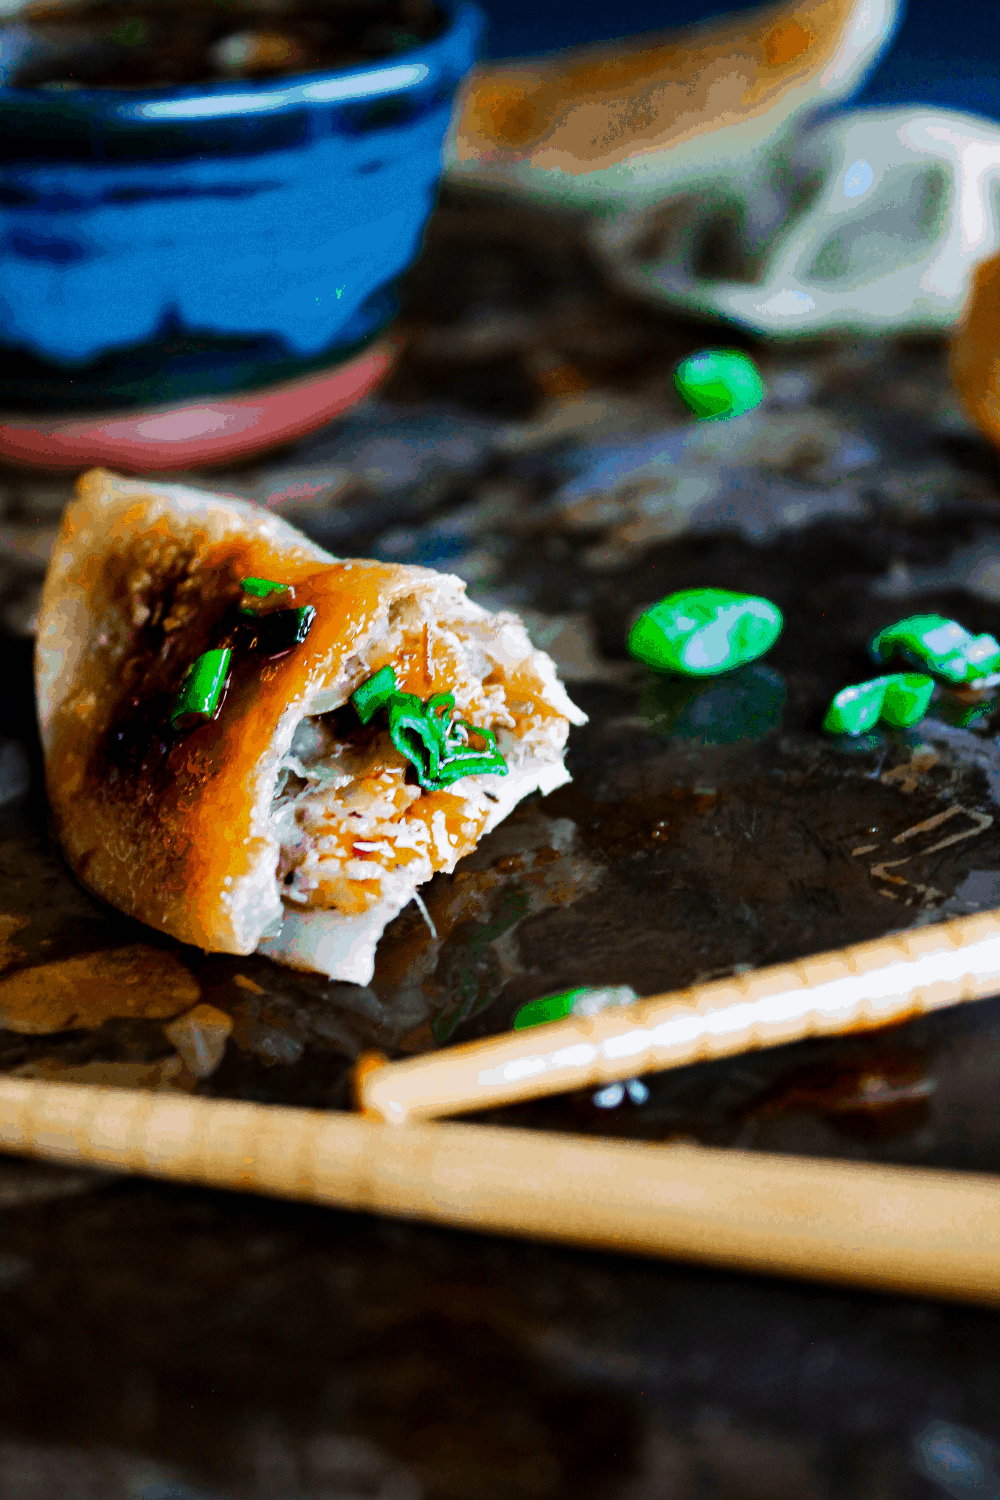 Close-up of half eaten dumplings with chopsticks and bowl of sauce.